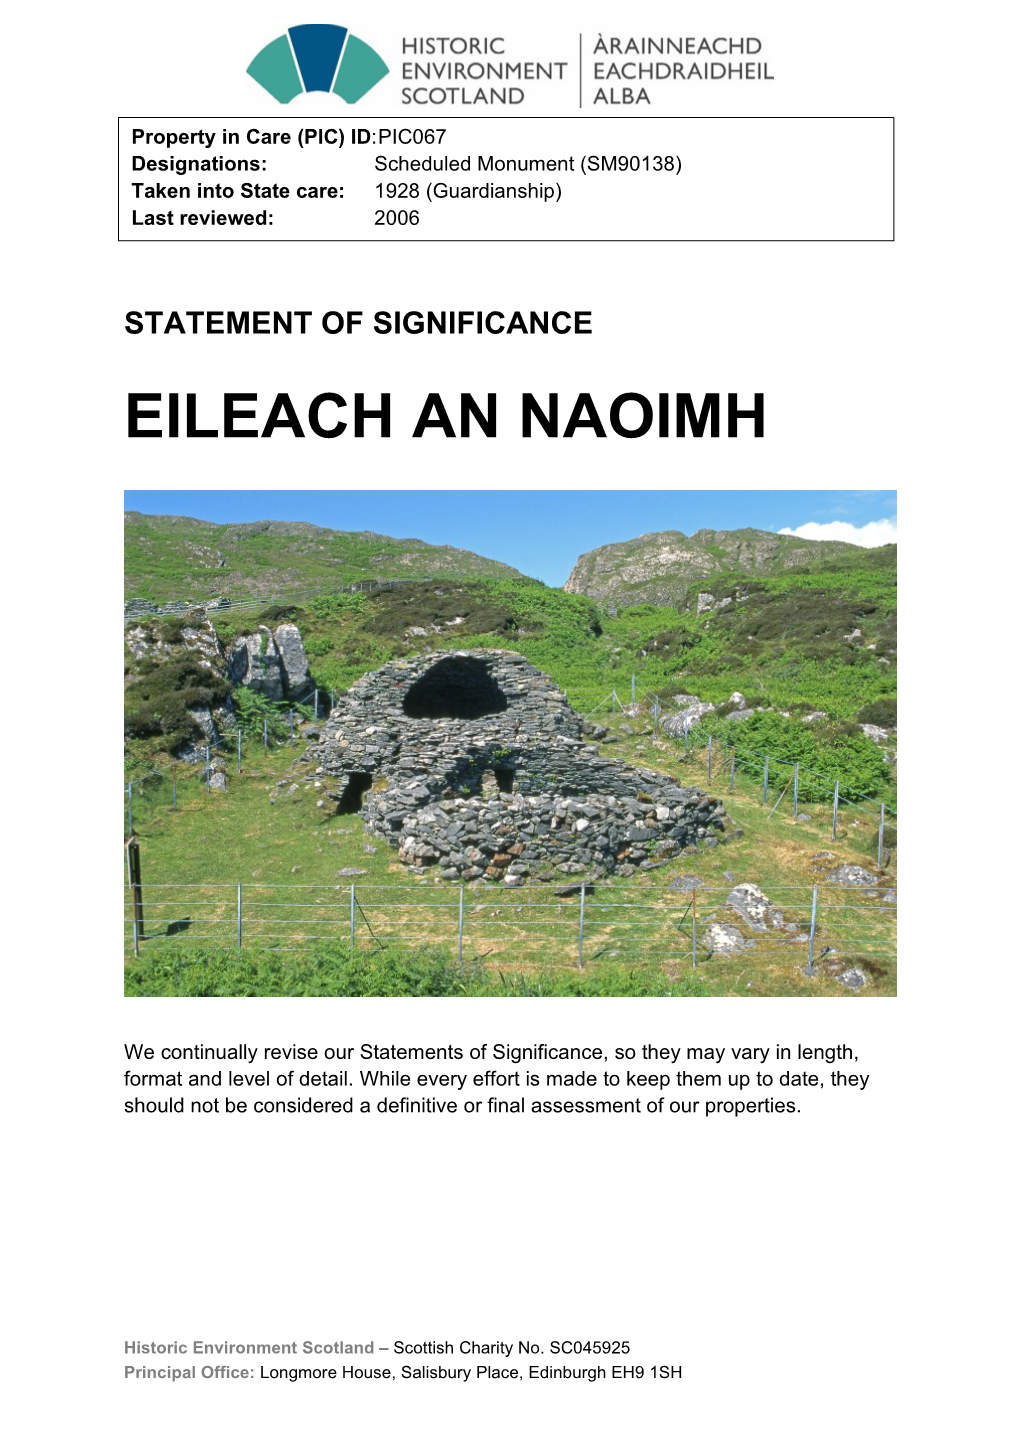 Eileach an Naoimh Statement of Significance